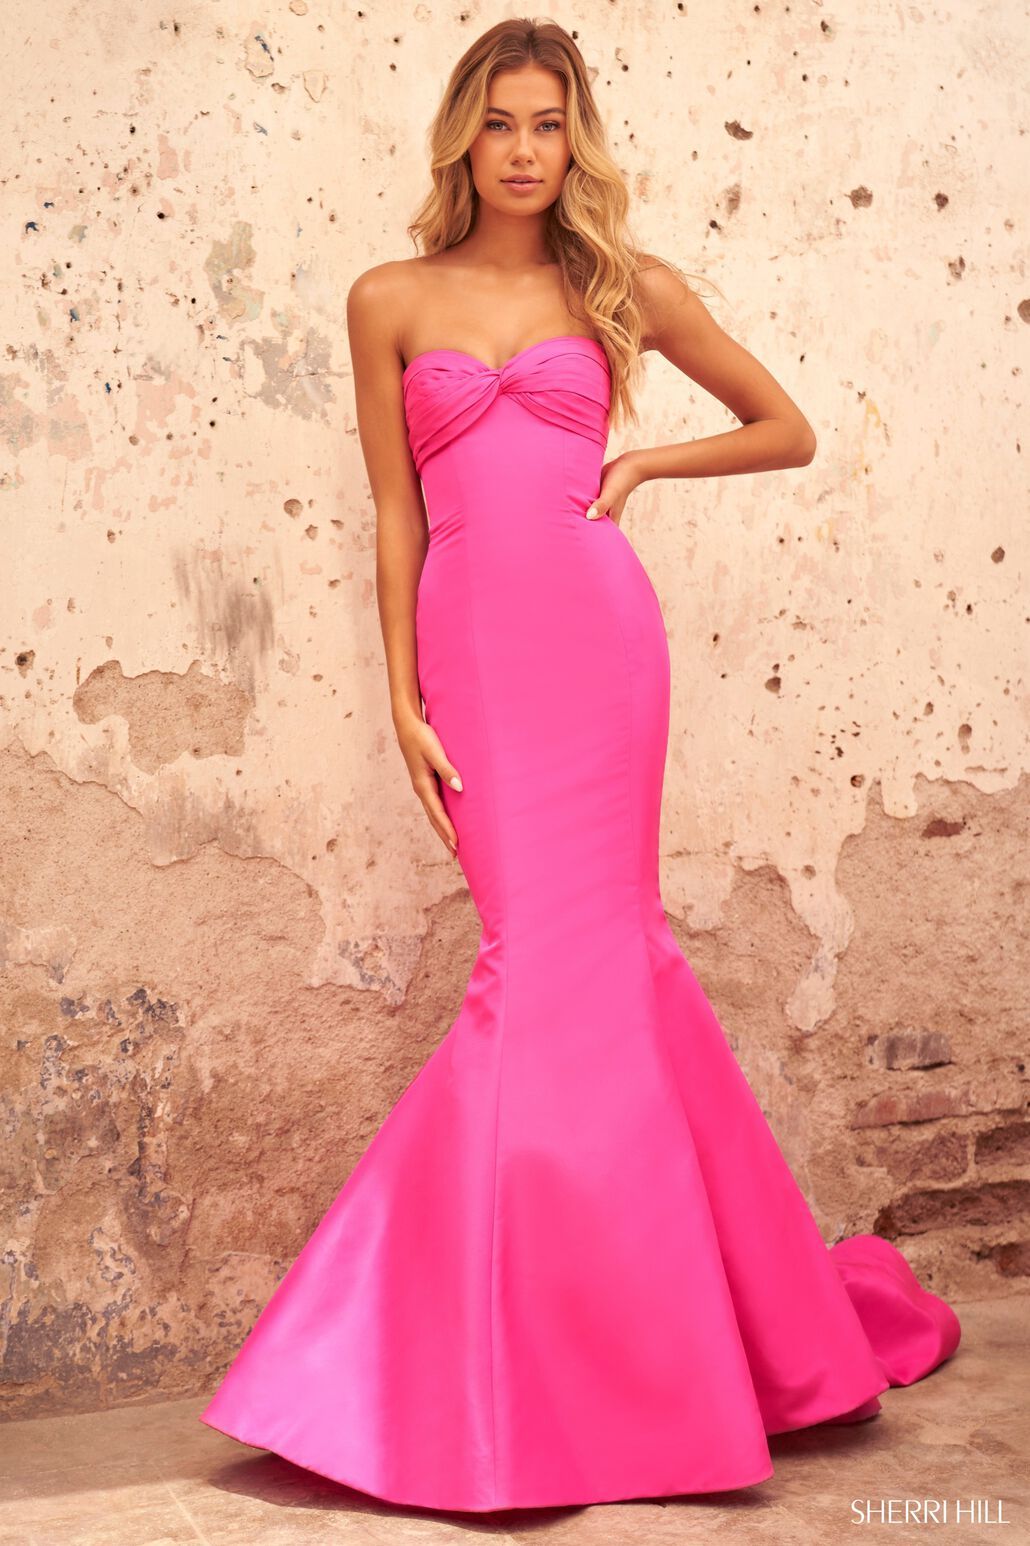 Sherri Hill 54876 bright pink prom dresses image.